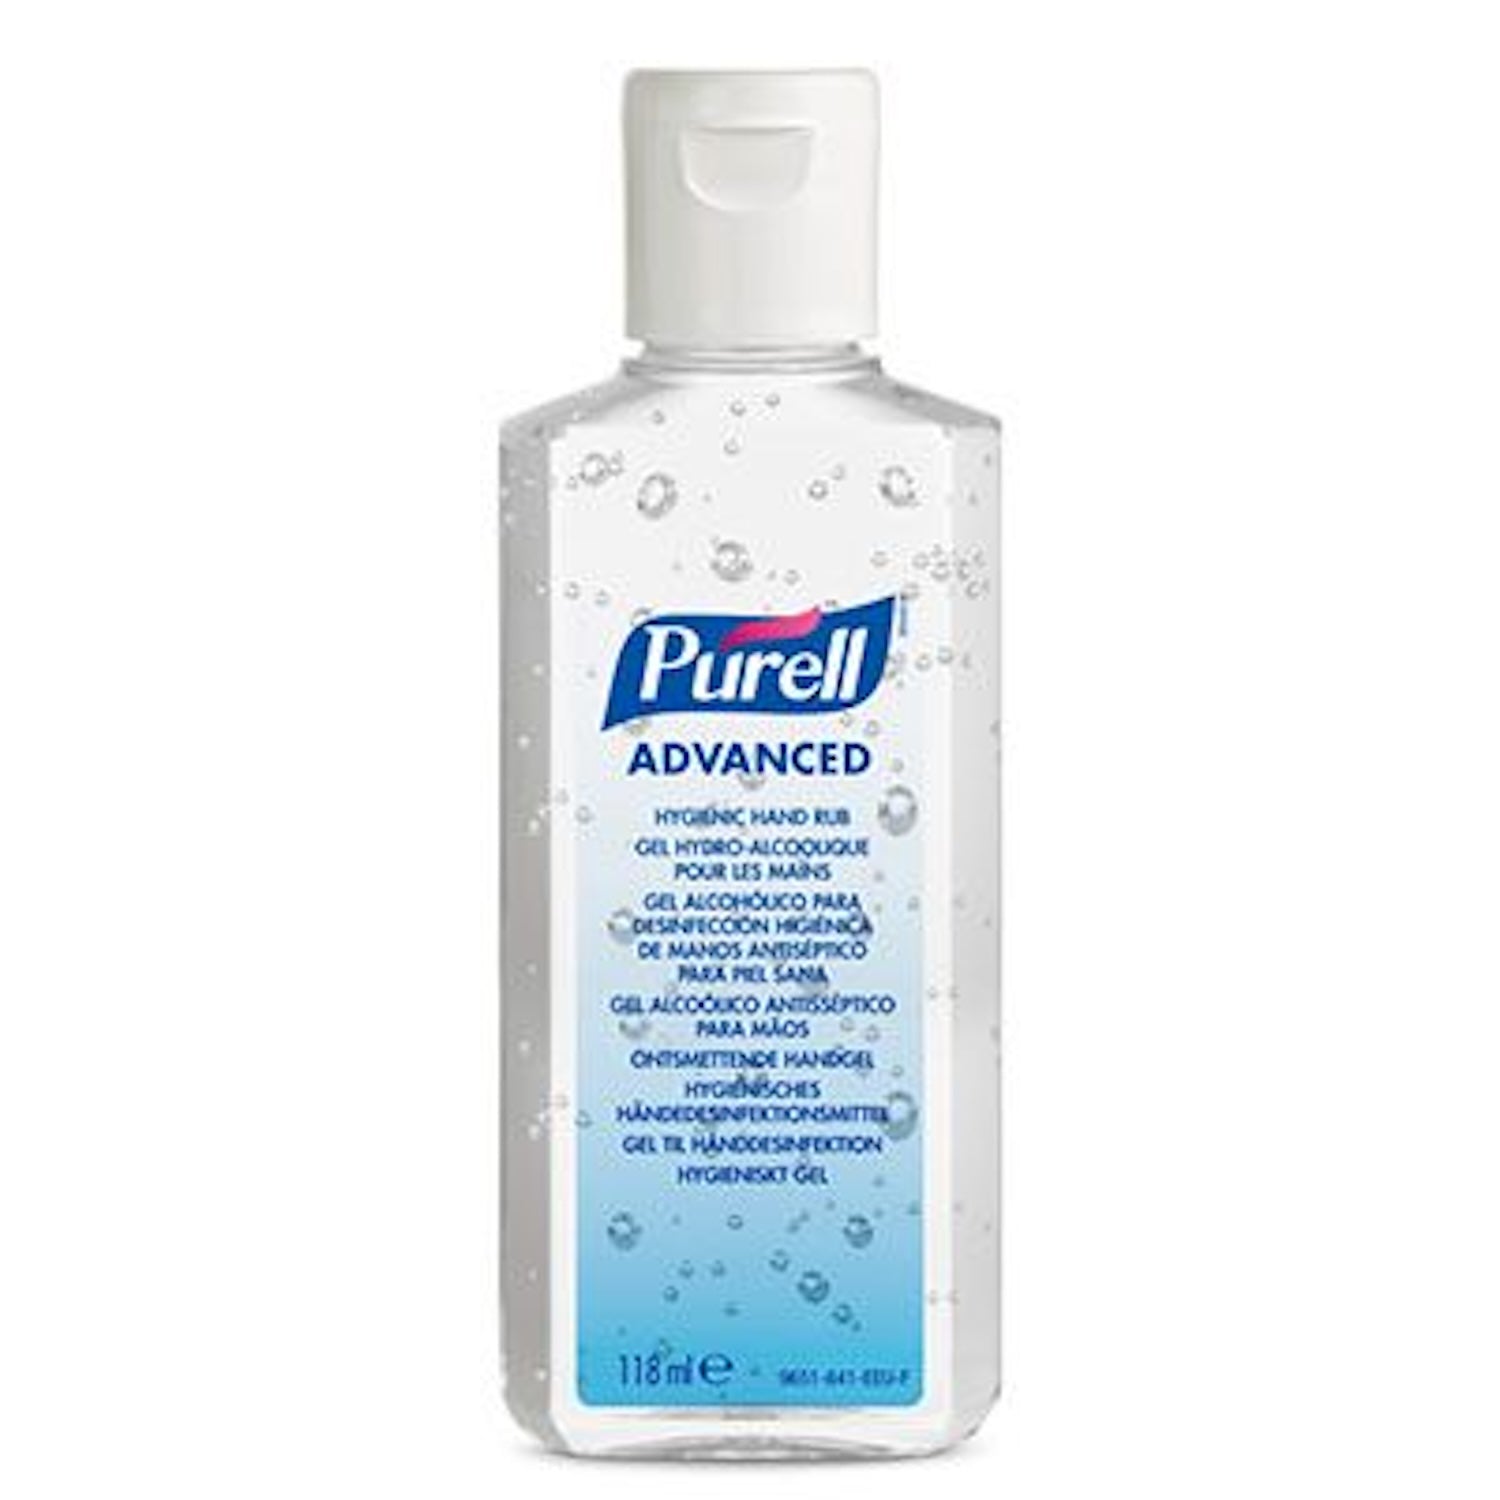 Purell Advanced Hygienic Hand Rub | 100ml | Single